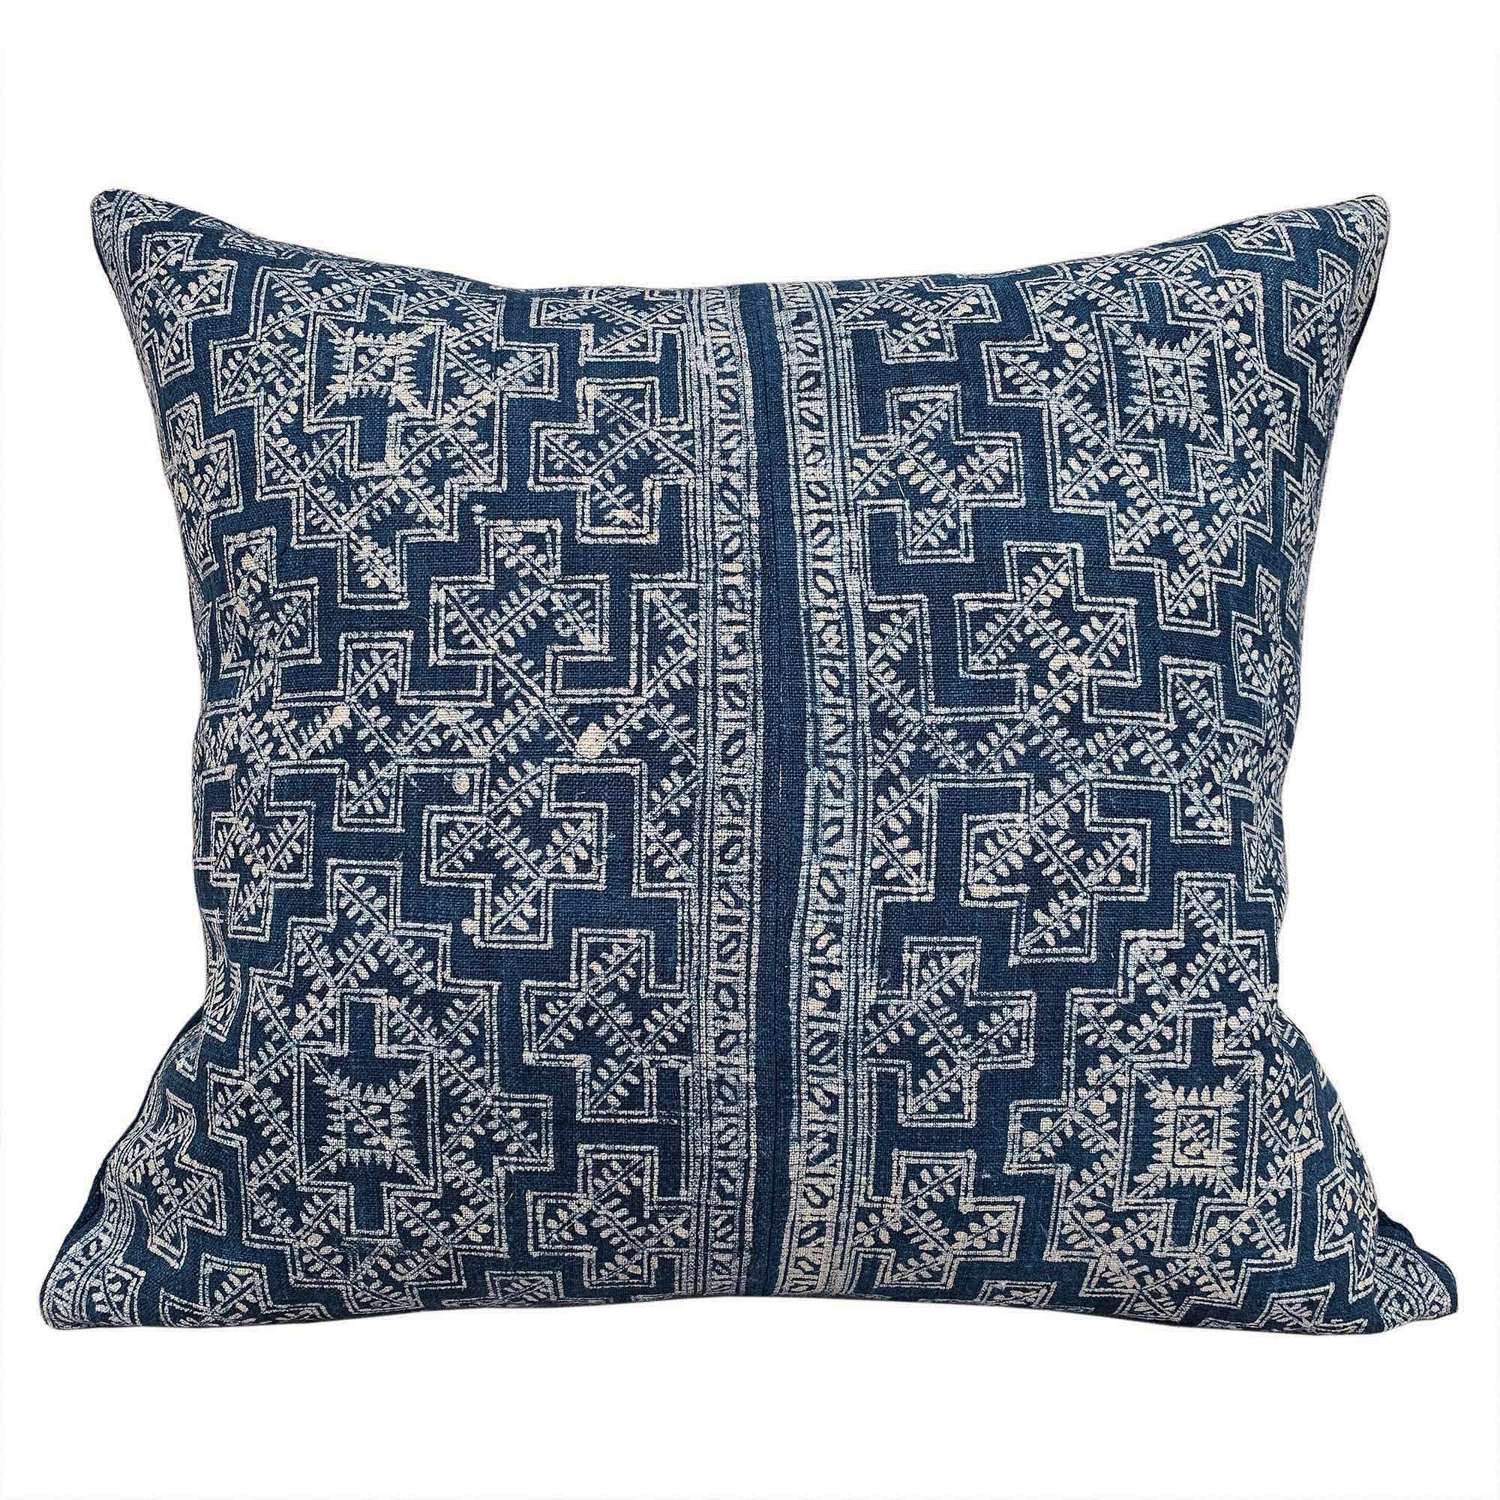 Indigo batik cushions